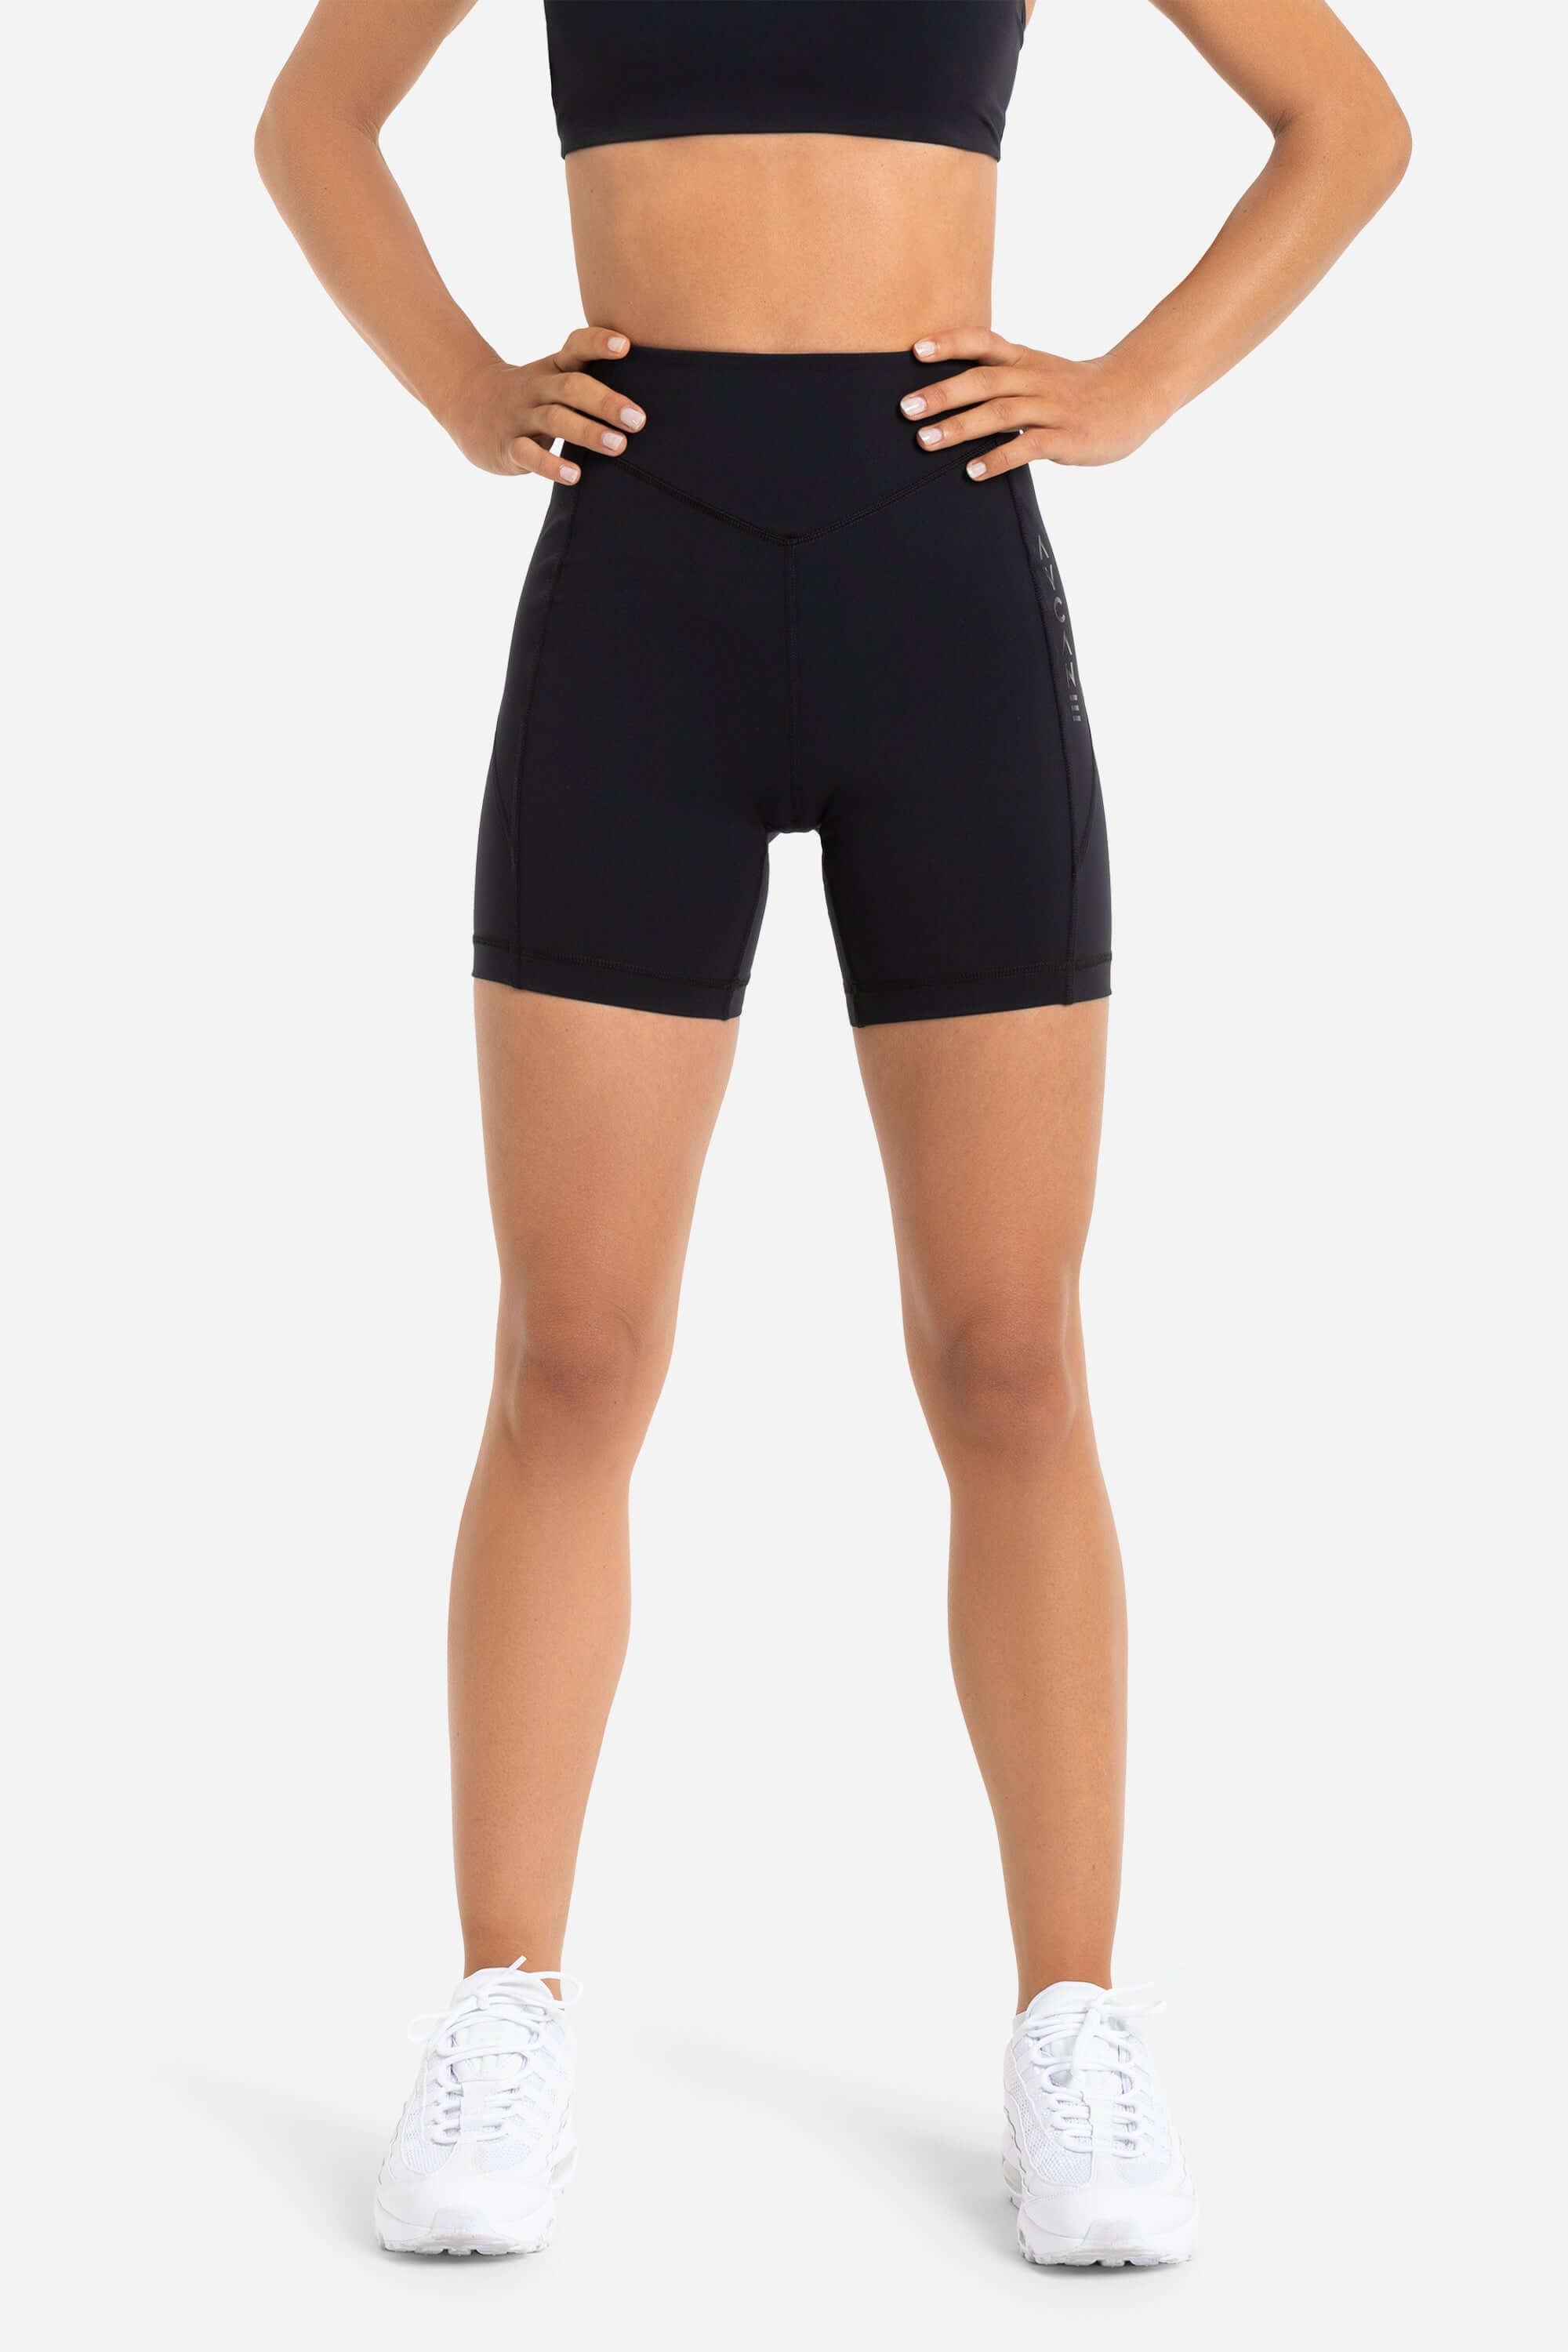 Buy Legging For Plus Size Women Short online | Lazada.com.ph